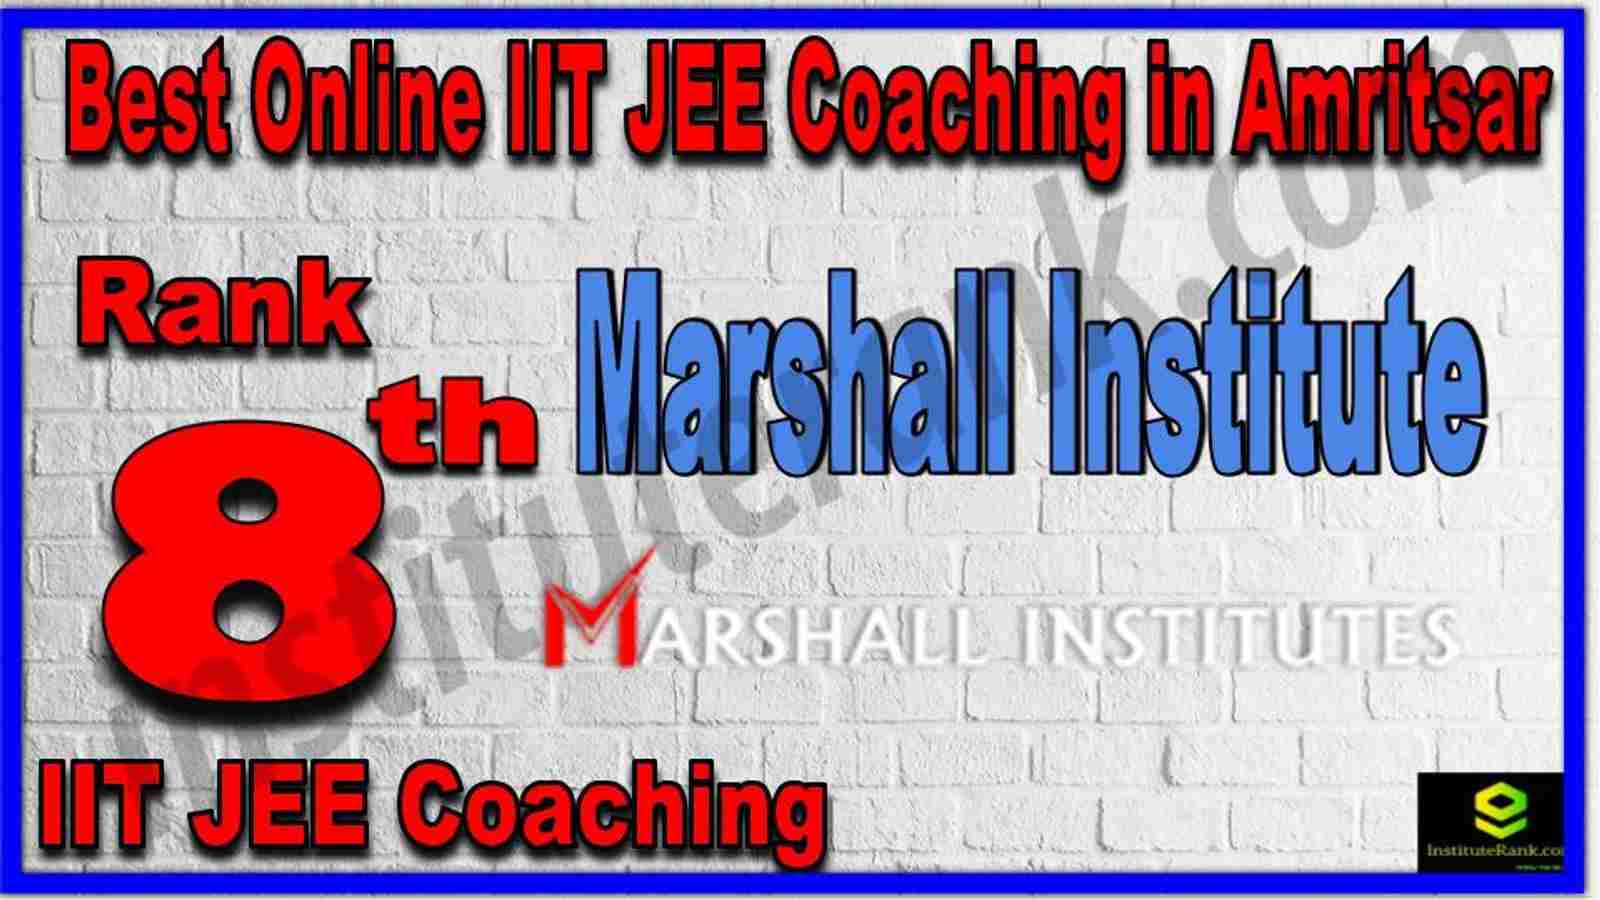 Rank 8th Best Online IIT JEE Coaching in Amritsar